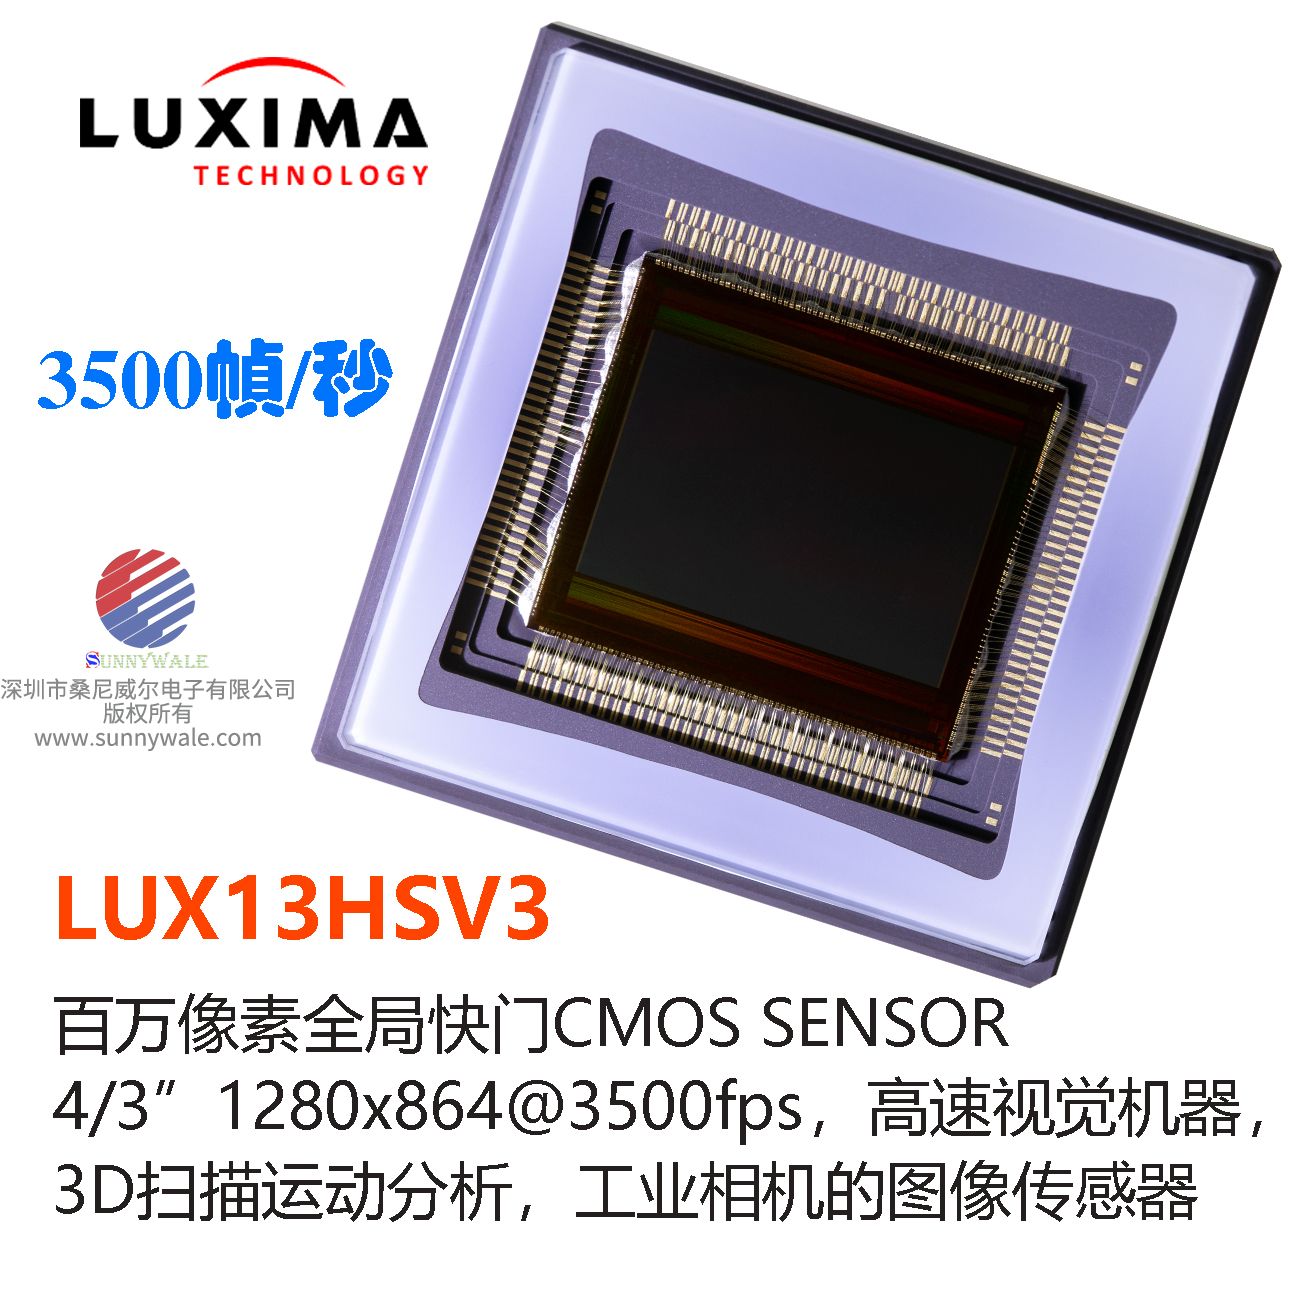 LUX13HSV3 鲁西玛，LUXIMA， LUX13HS,图像传感器，100万像素3500帧，全局快门曝光CMOS，专为高速机器视觉、3D扫描、运动分析，工业相机，低噪声像素与CDS，基于专利浮动存储门技术，高帧率高像素大像元CMOS